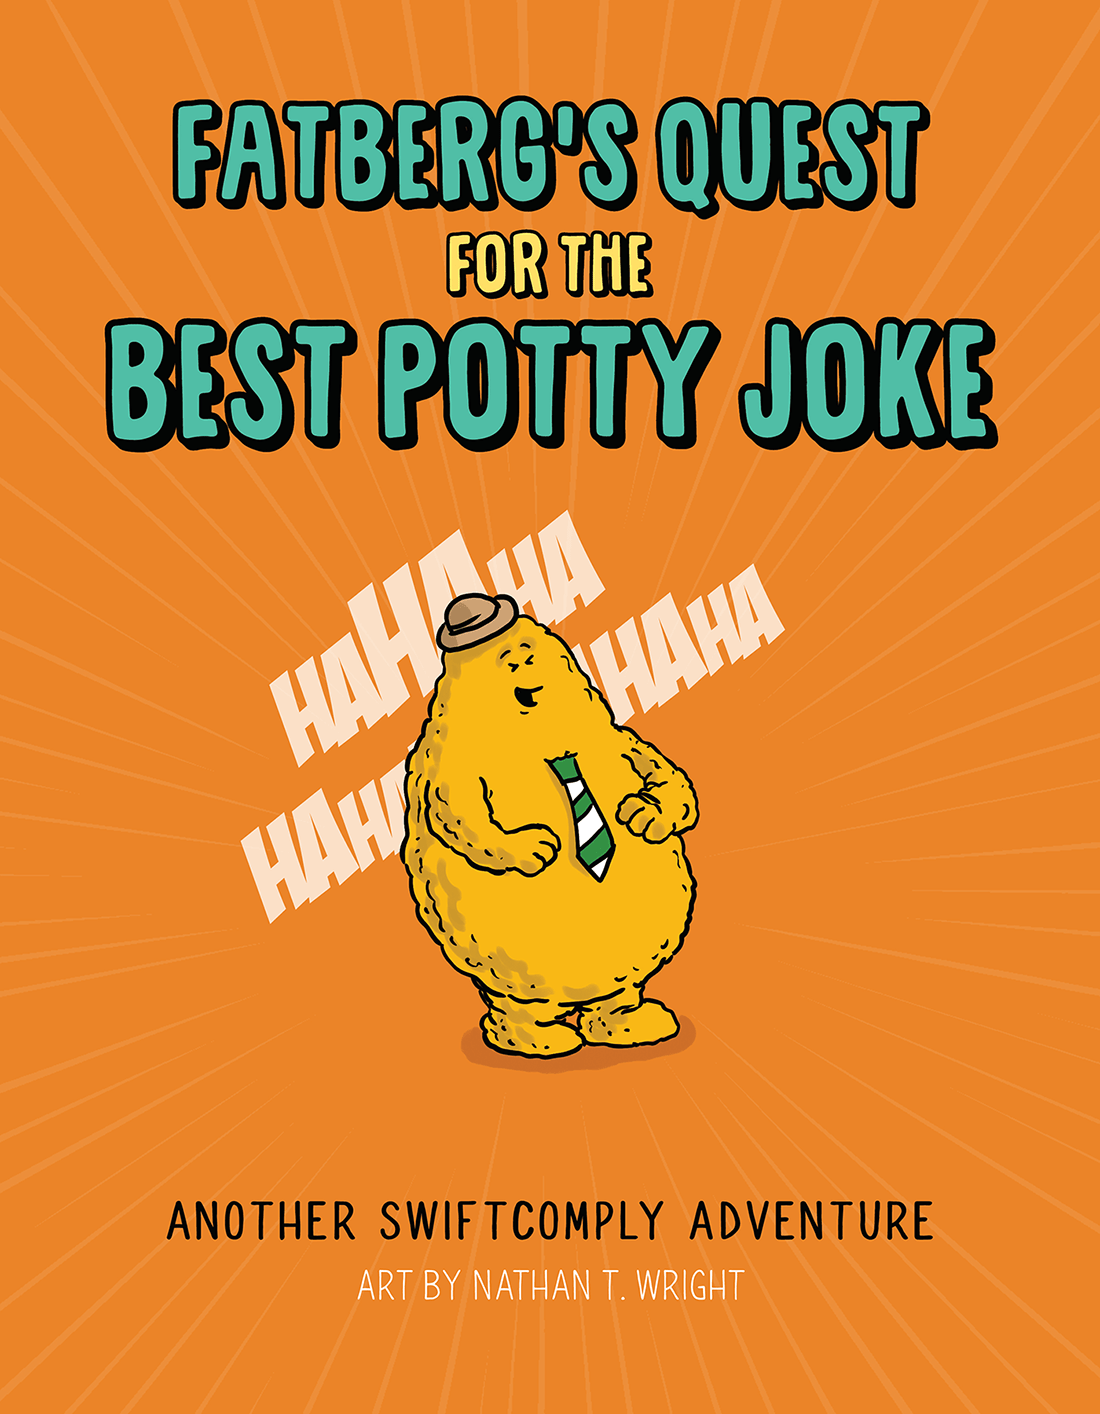 Fateberg's quest for the best potty joke.